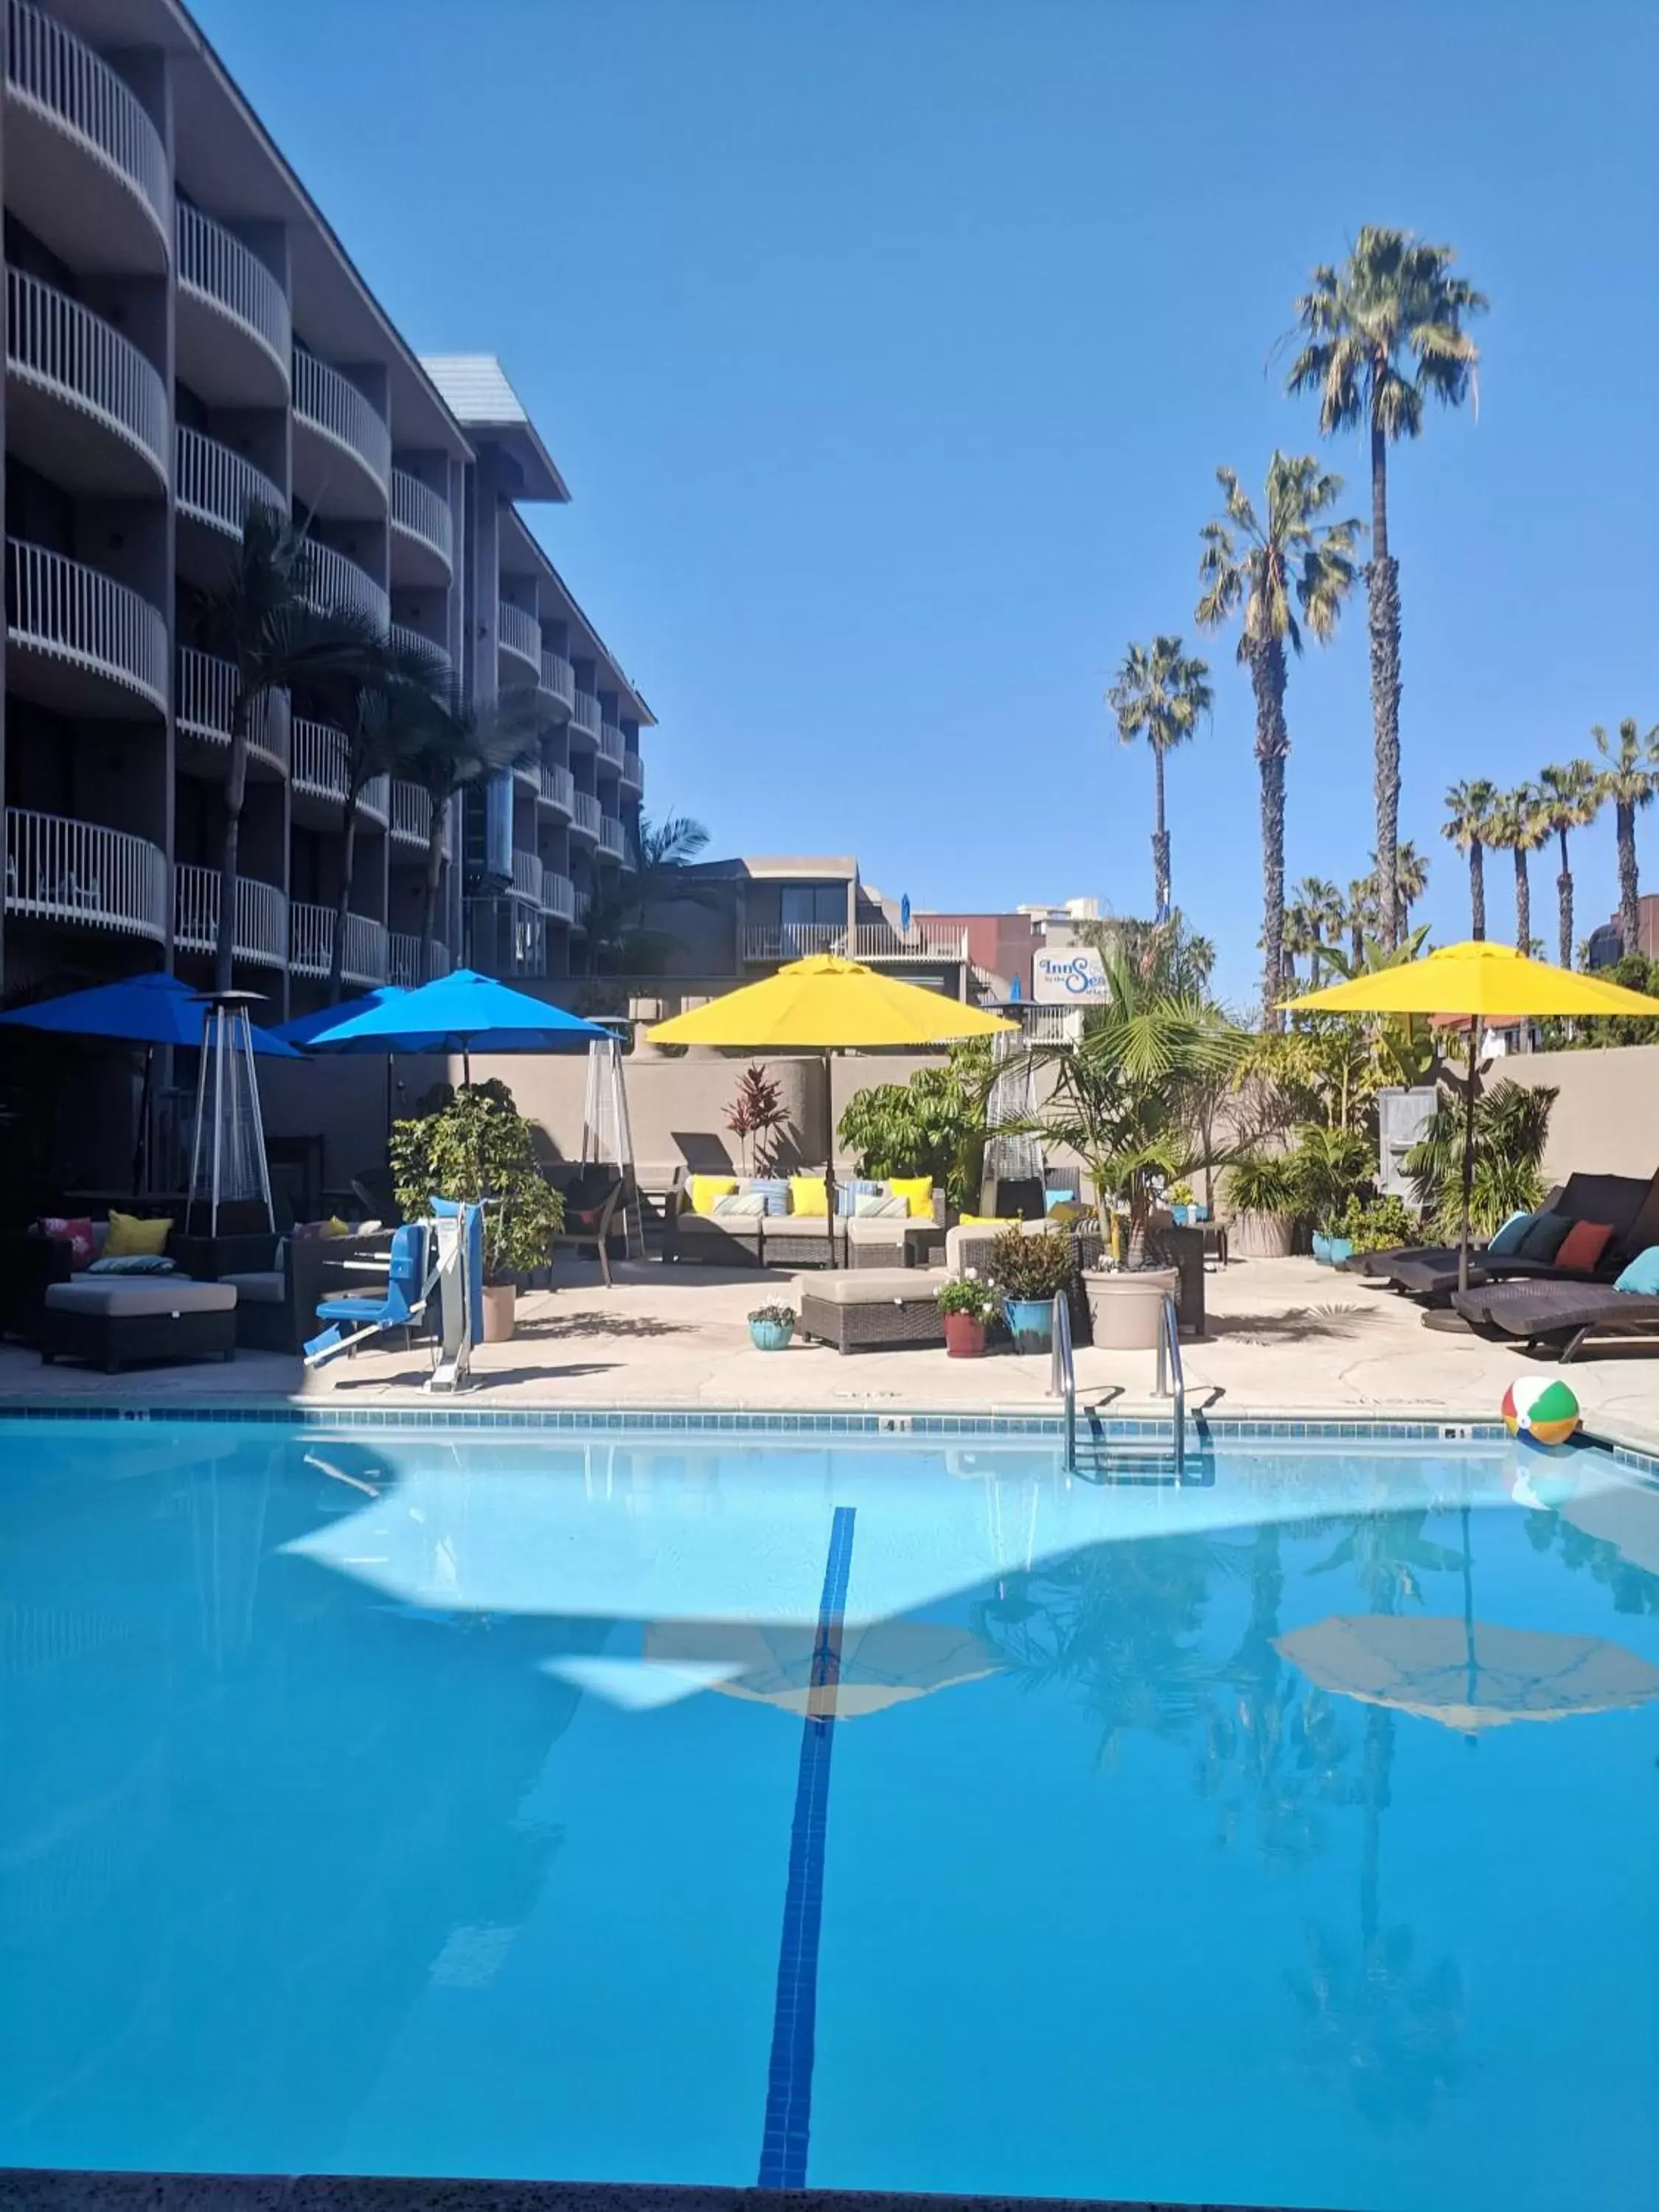 Property building, Swimming Pool in Inn by the Sea, La Jolla